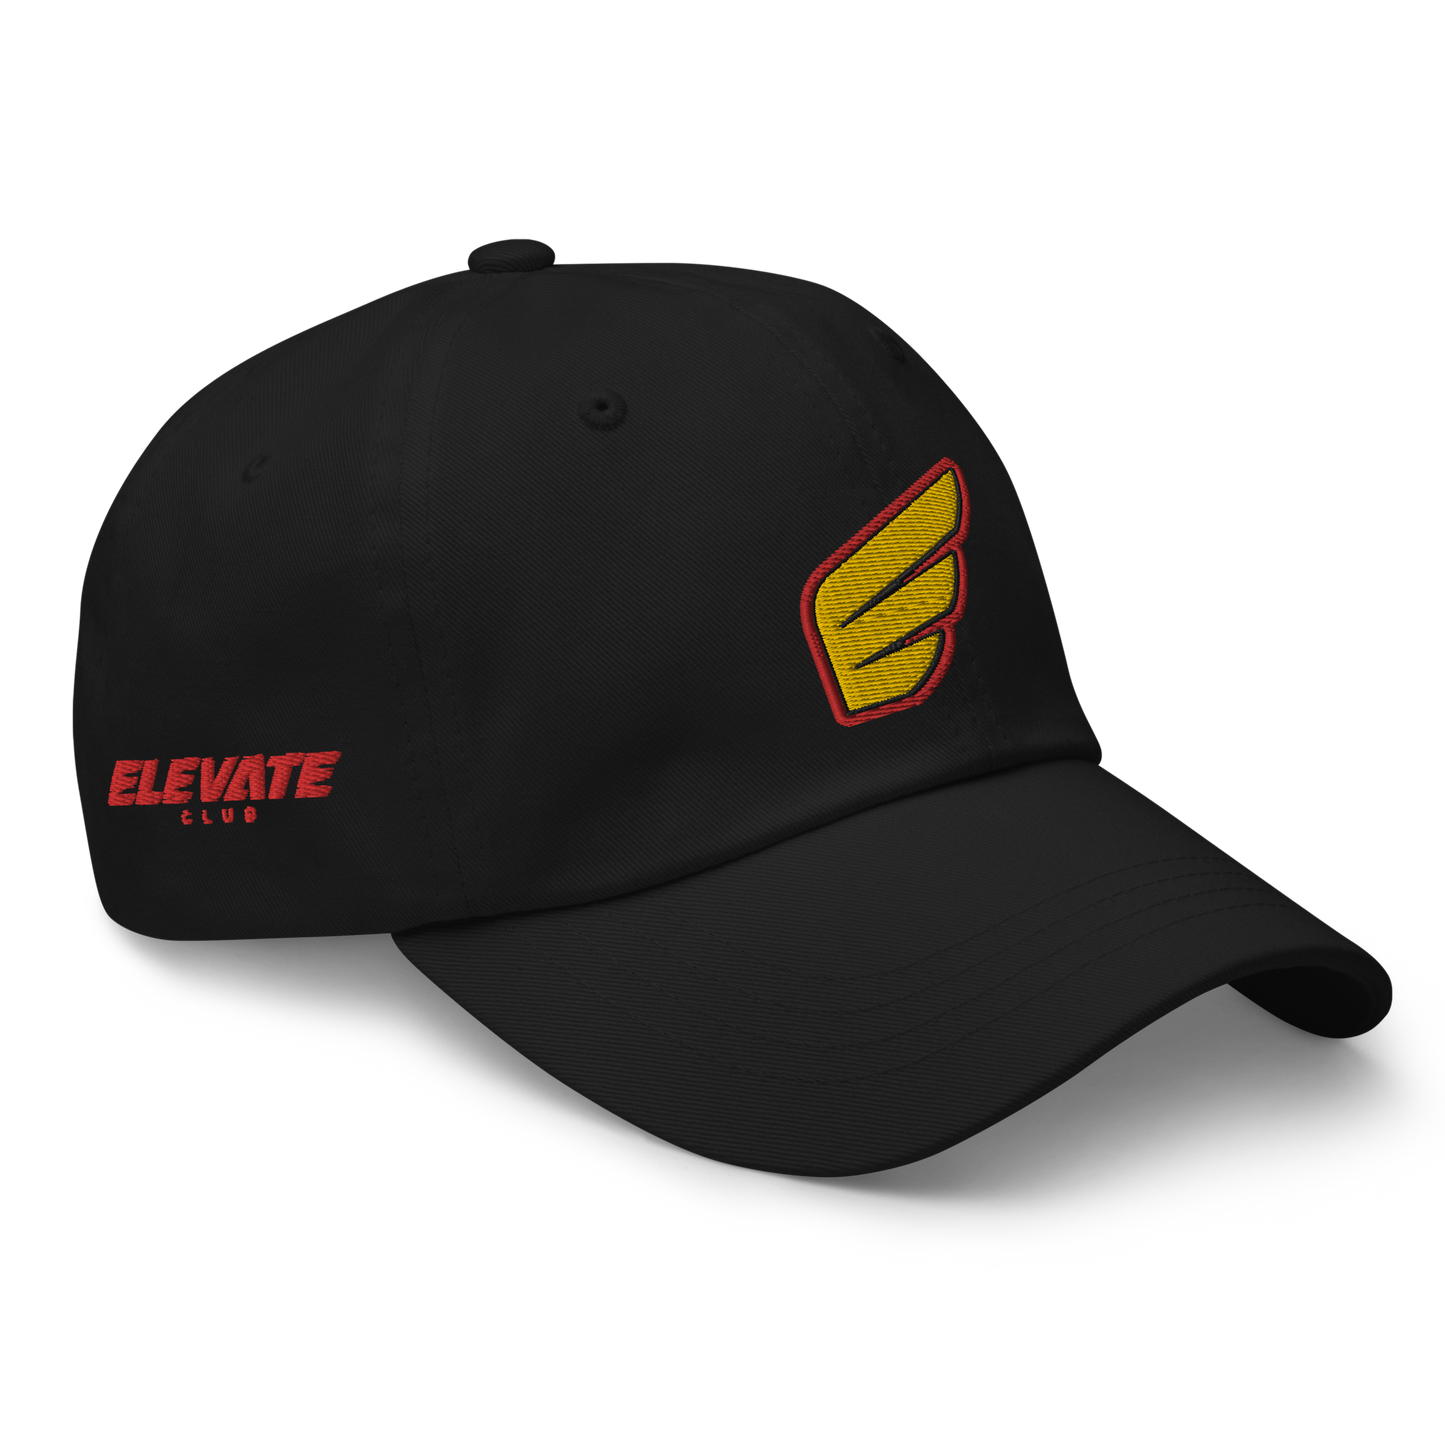 "ELEVATE LOGO" - Dad hat (Black)